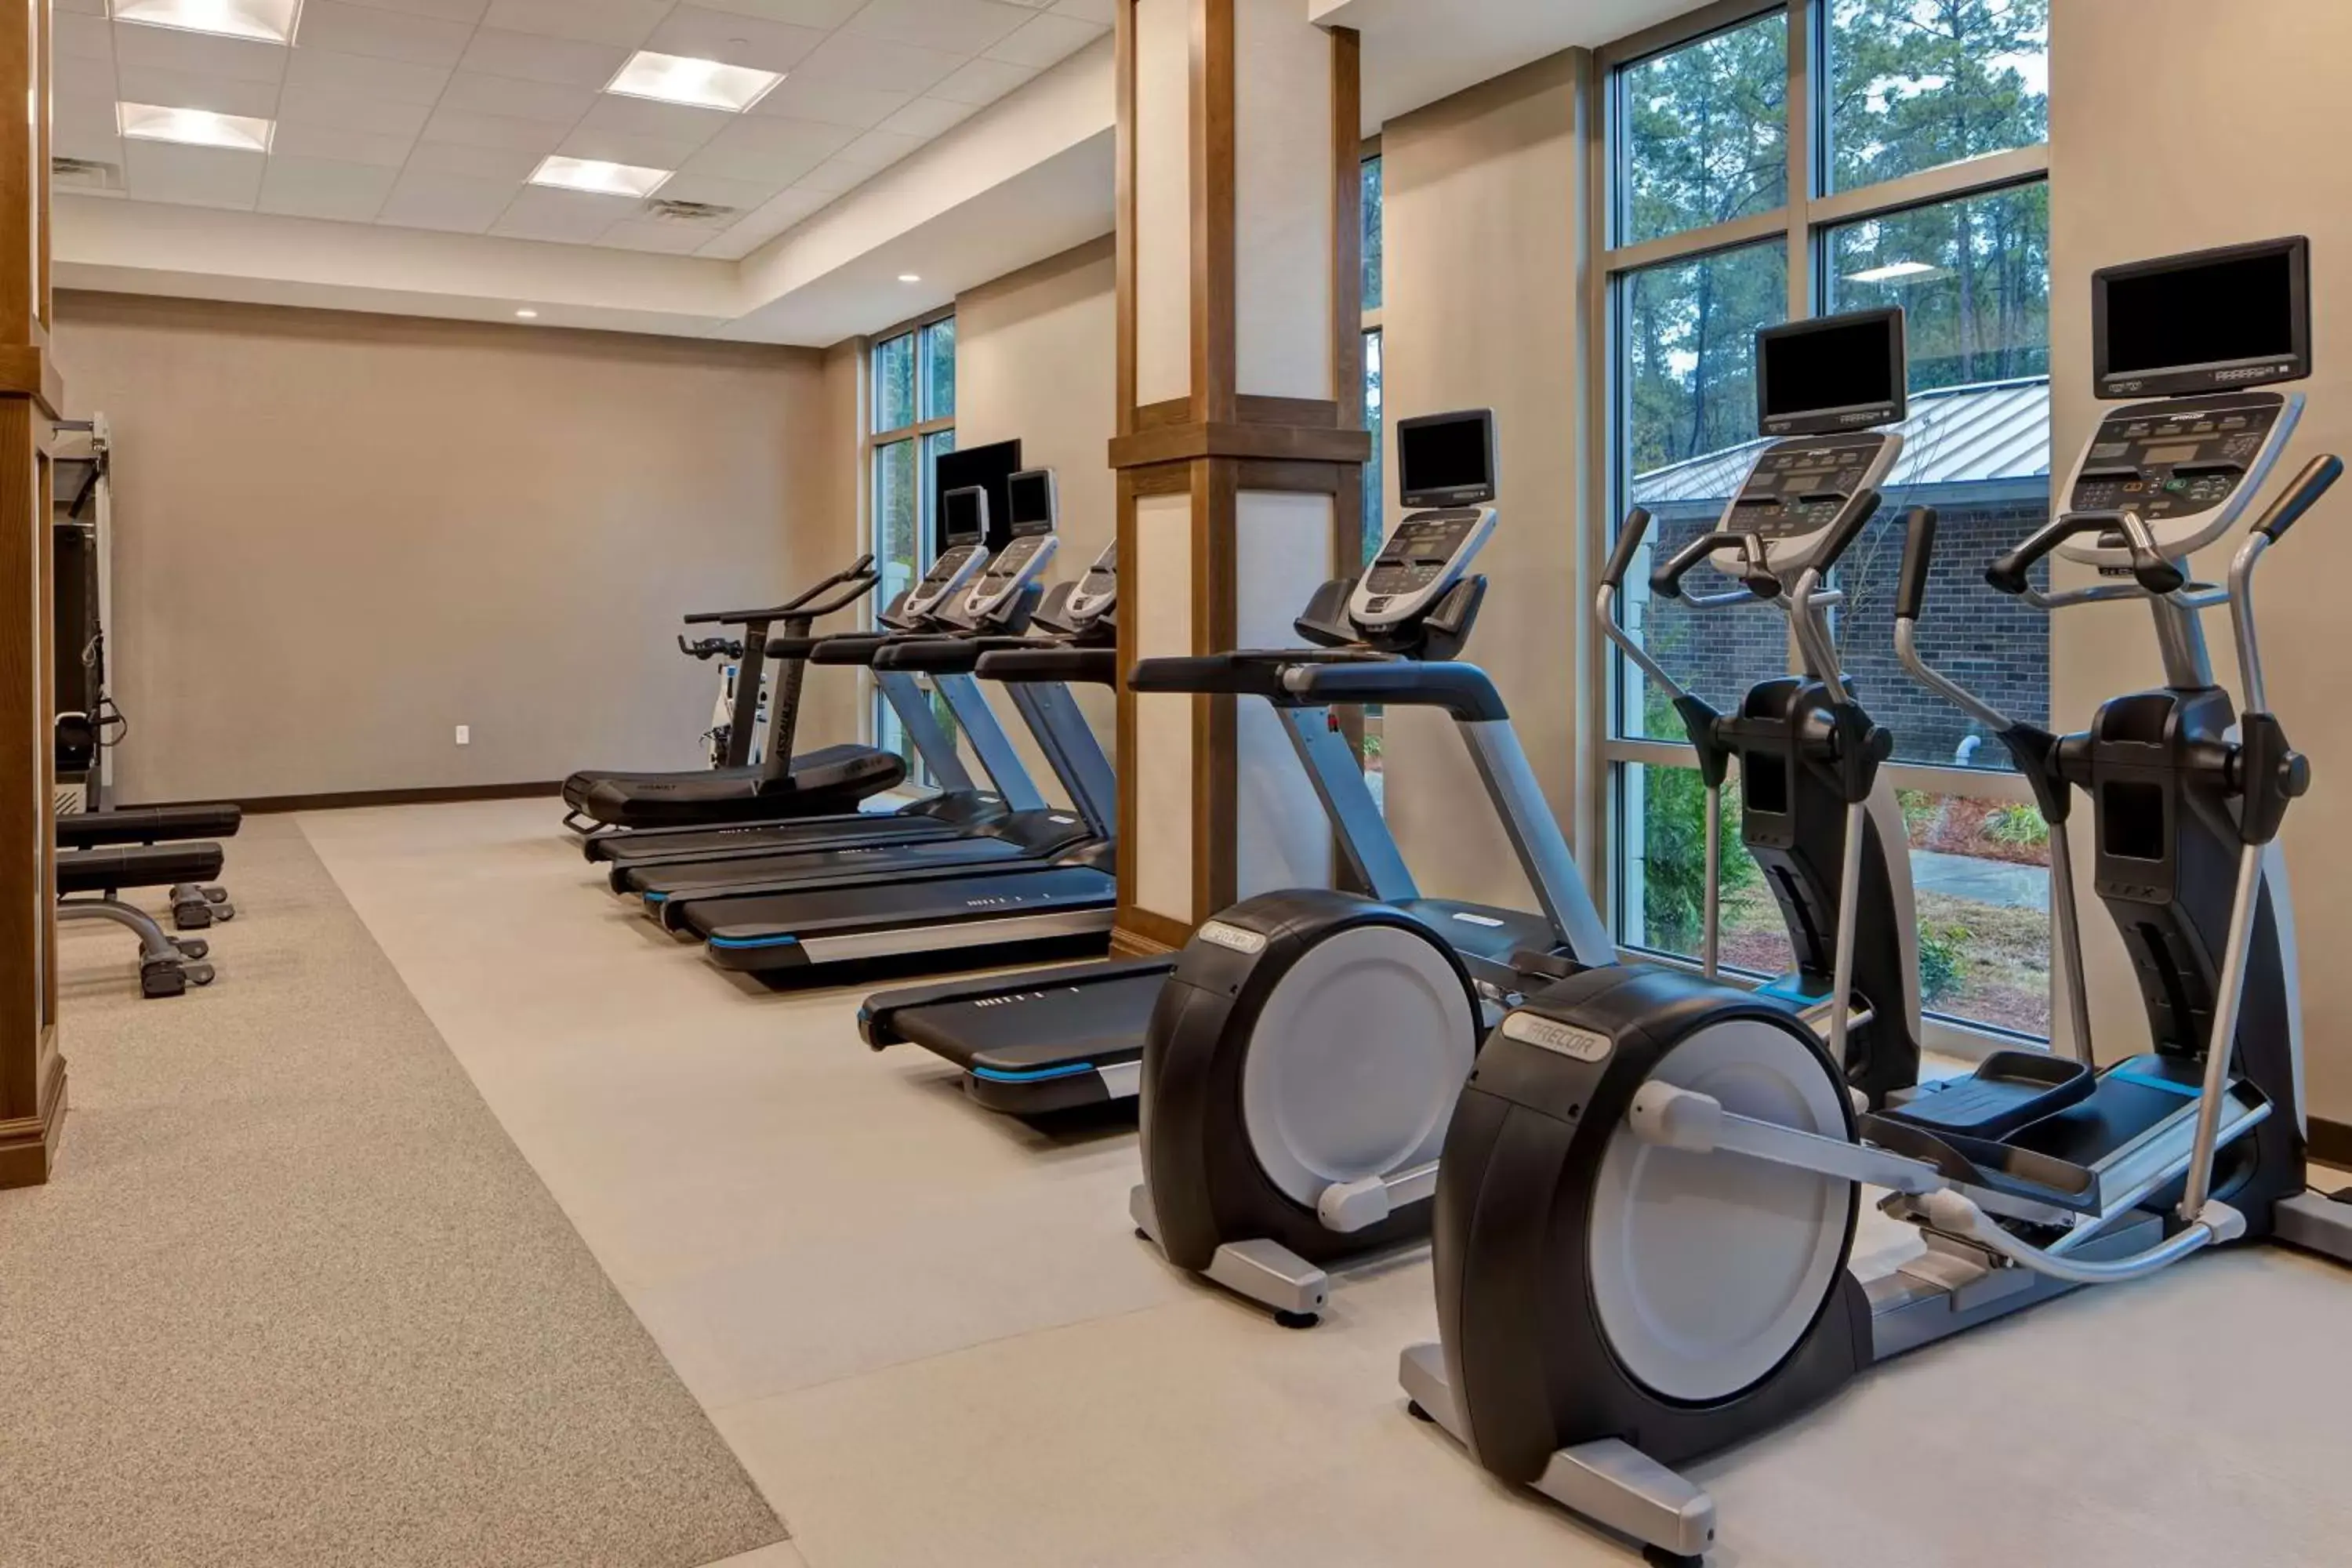 Fitness centre/facilities, Fitness Center/Facilities in Hilton Garden Inn Summerville, Sc